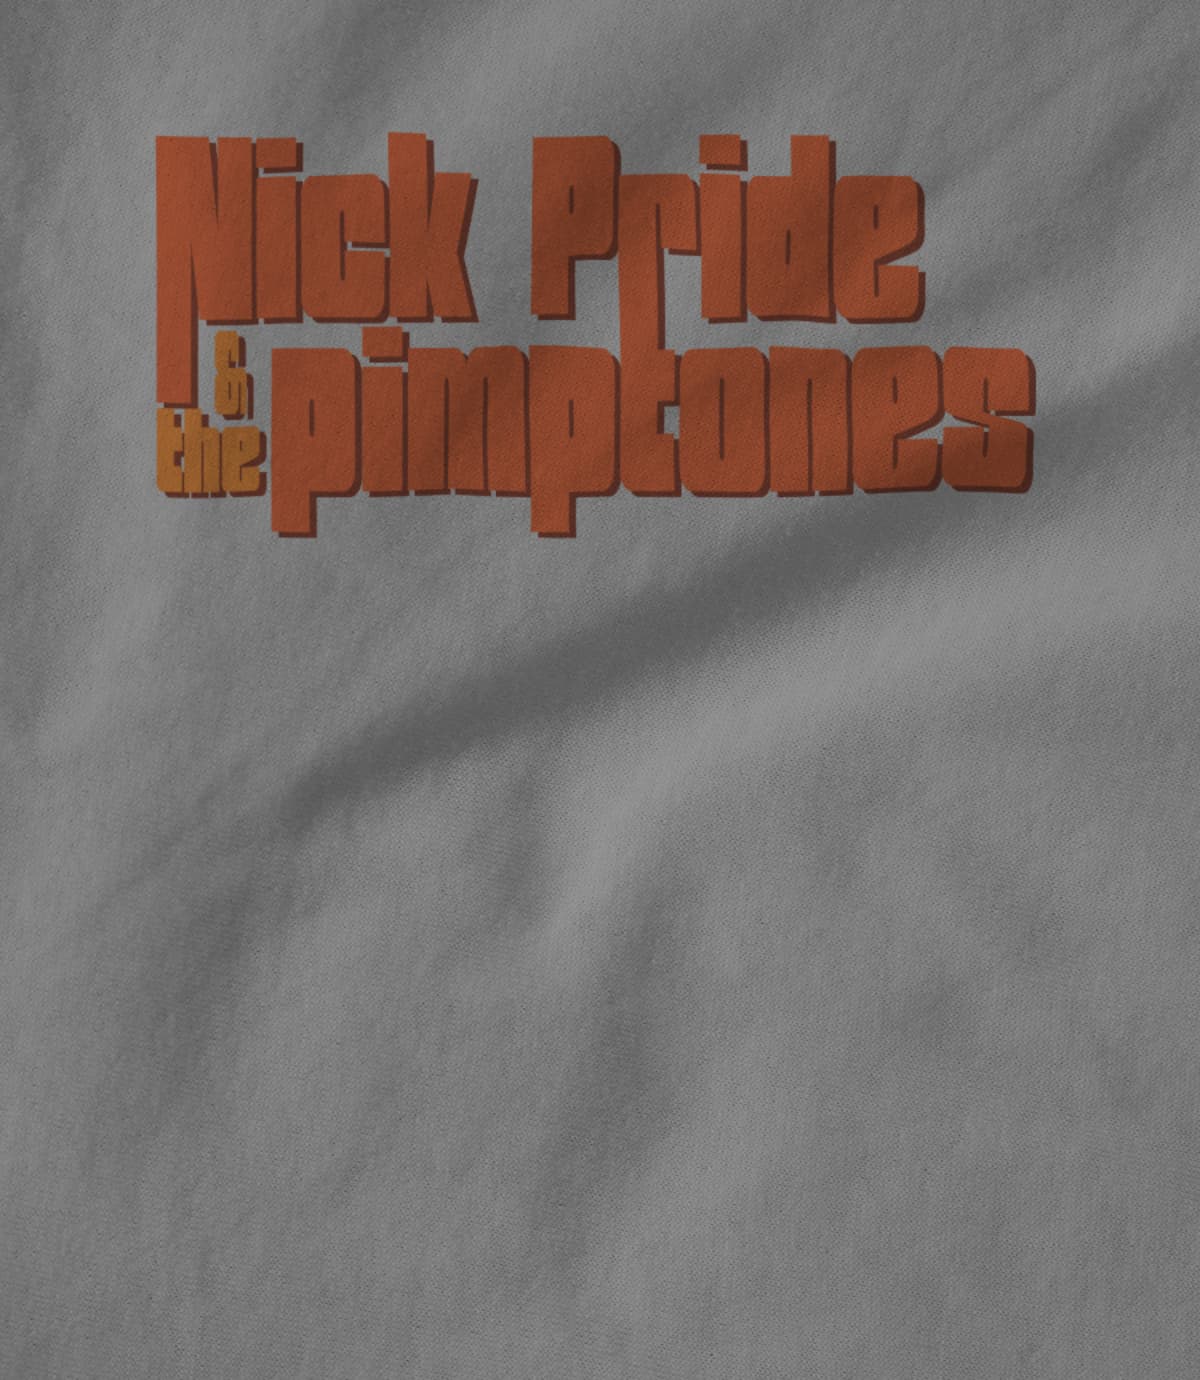 Nick Pride and The Pimptones